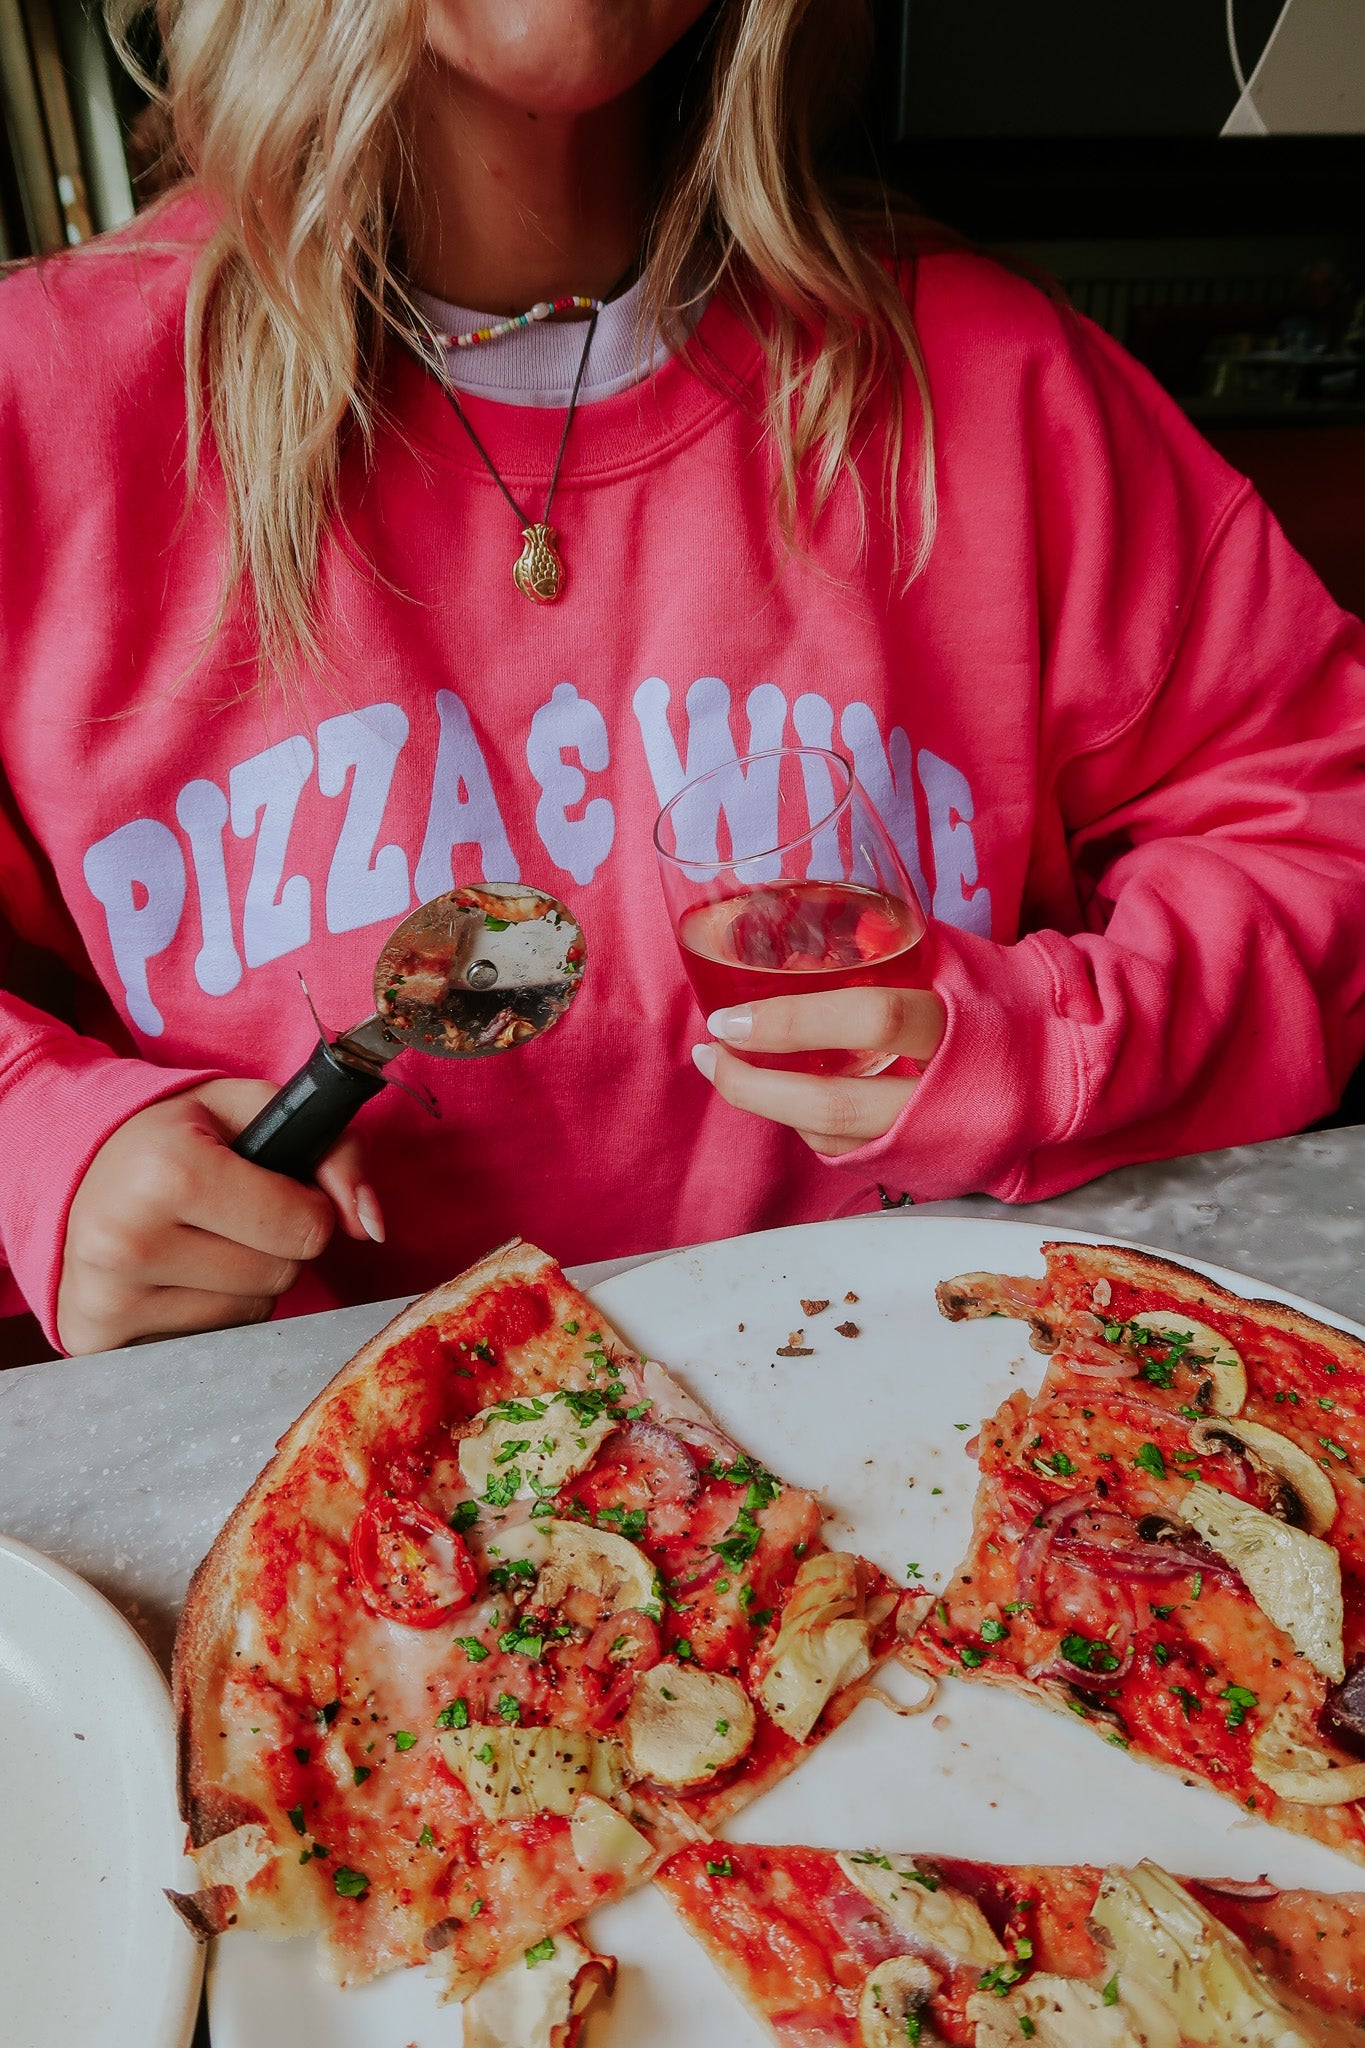 The Pizza & Wine Oversized Sweatshirt